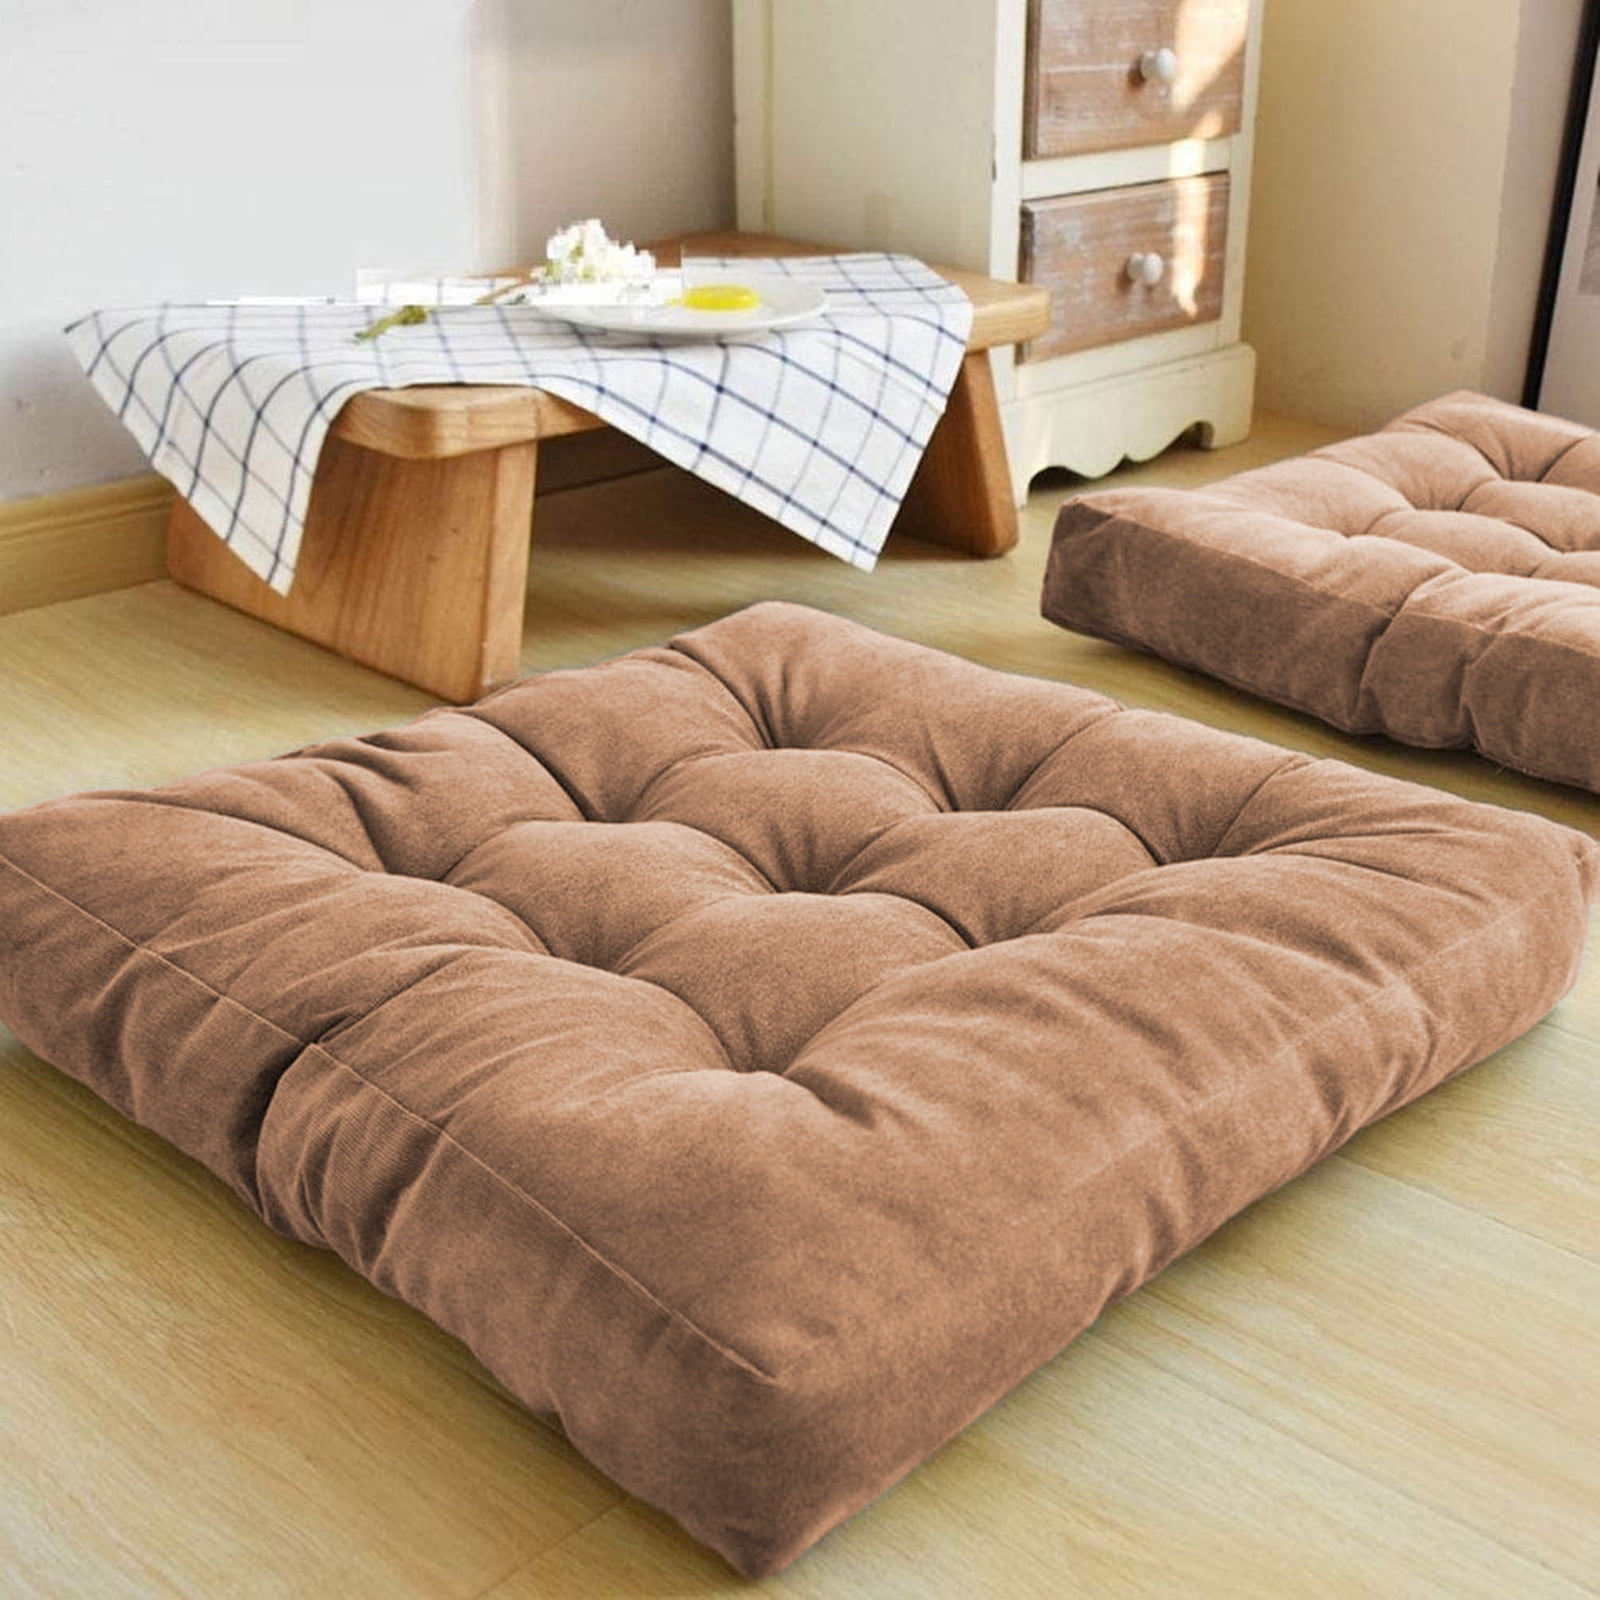 Leonard Round Floor Seat Pillows Cushions 18.9 inch x 18.9 inch, Soft Thicken Yoga Meditation Cushion Pouf Tufted Corduroy Tatami Floor Pillow Reading